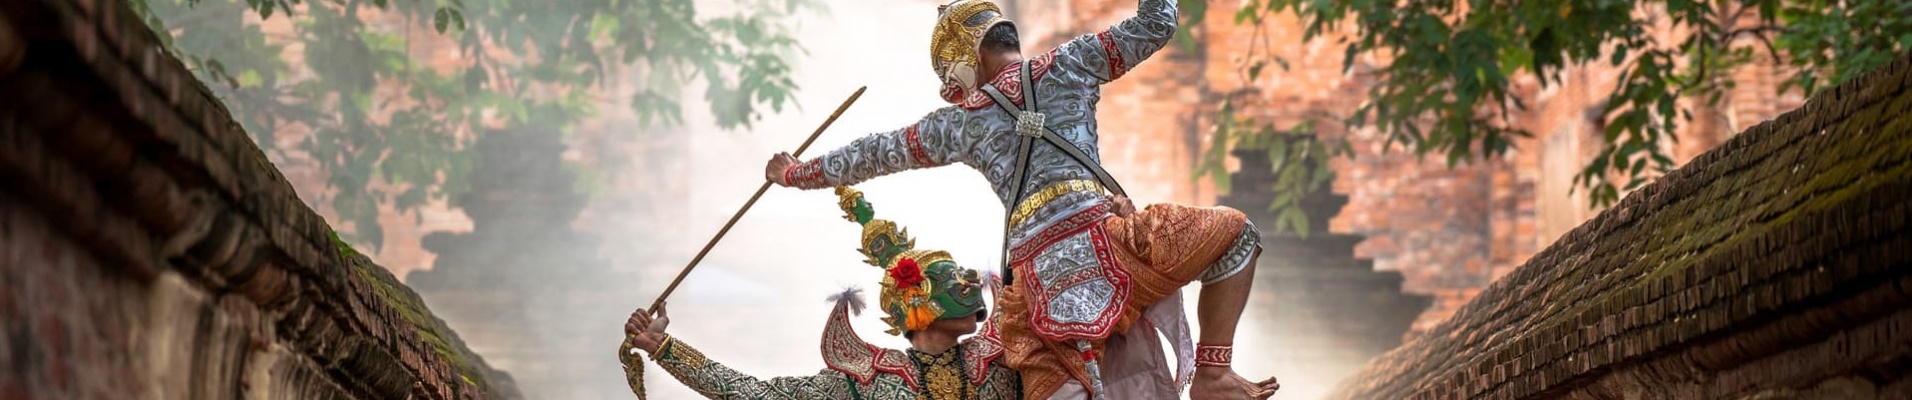 Danse traditionnelle Asie